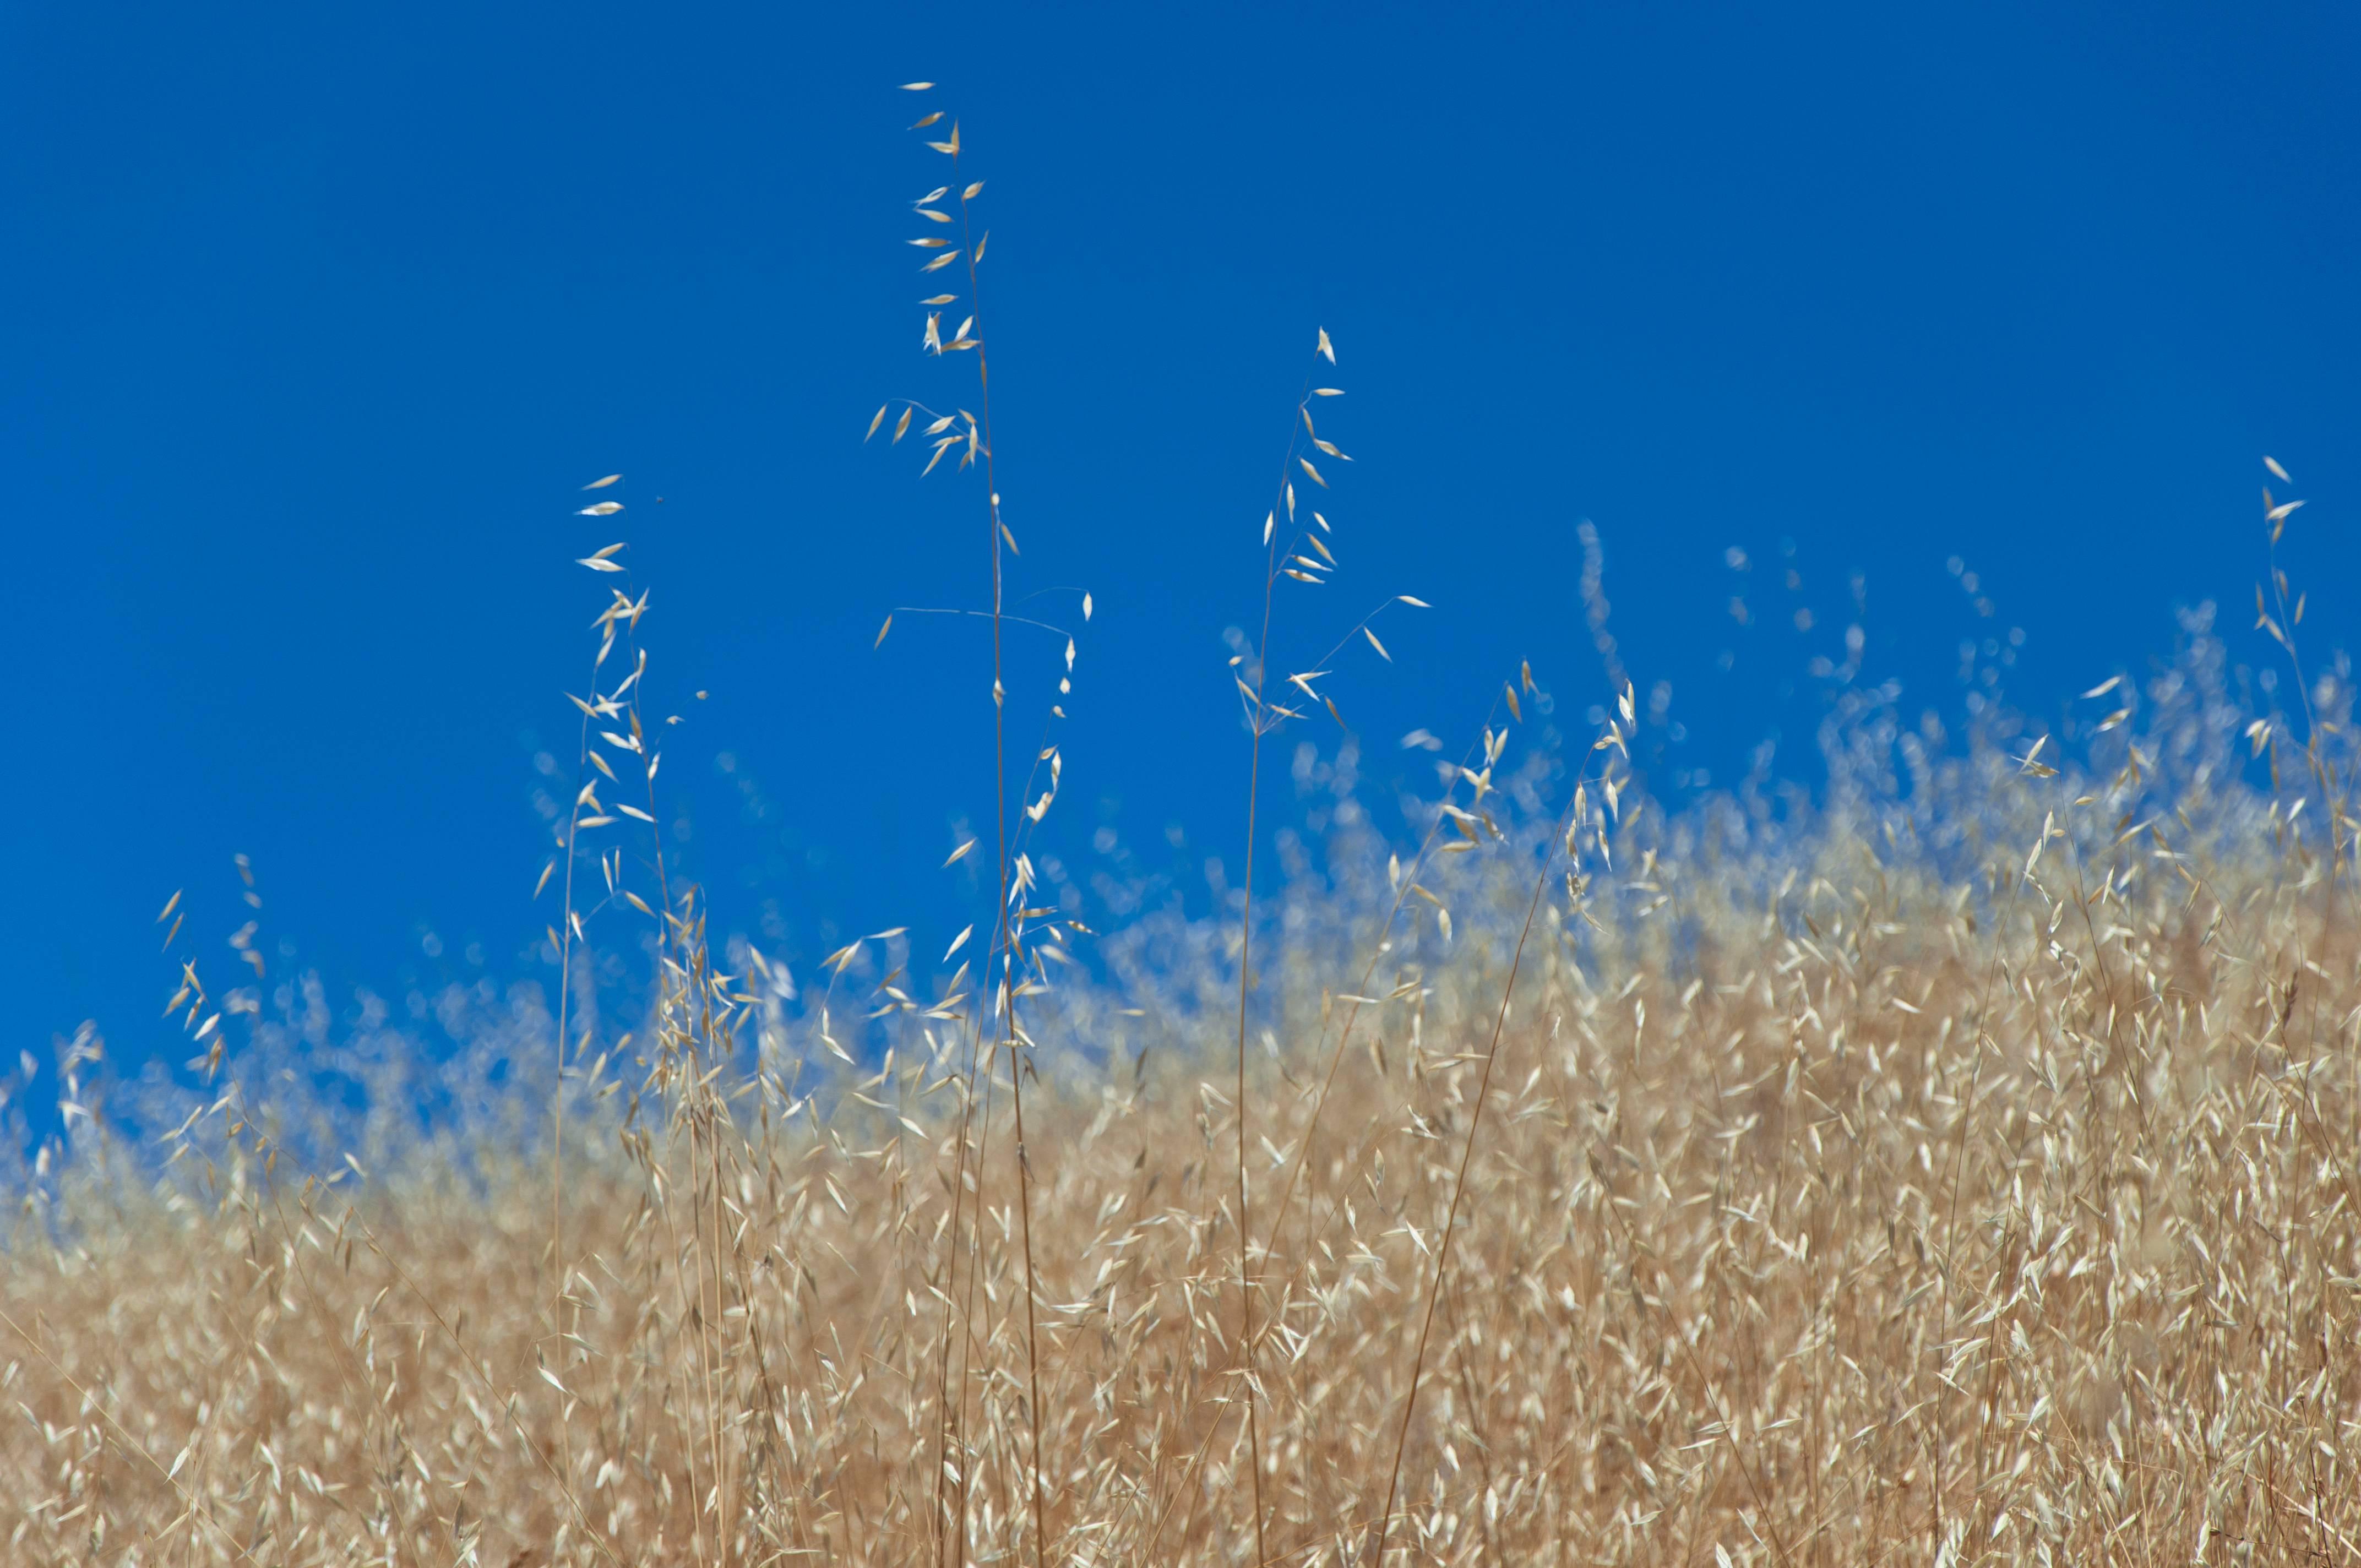 Gaétan Caron Landscape Print - "Golden Mendocino" California Landscape Photograph of Weeds and Blue Sky